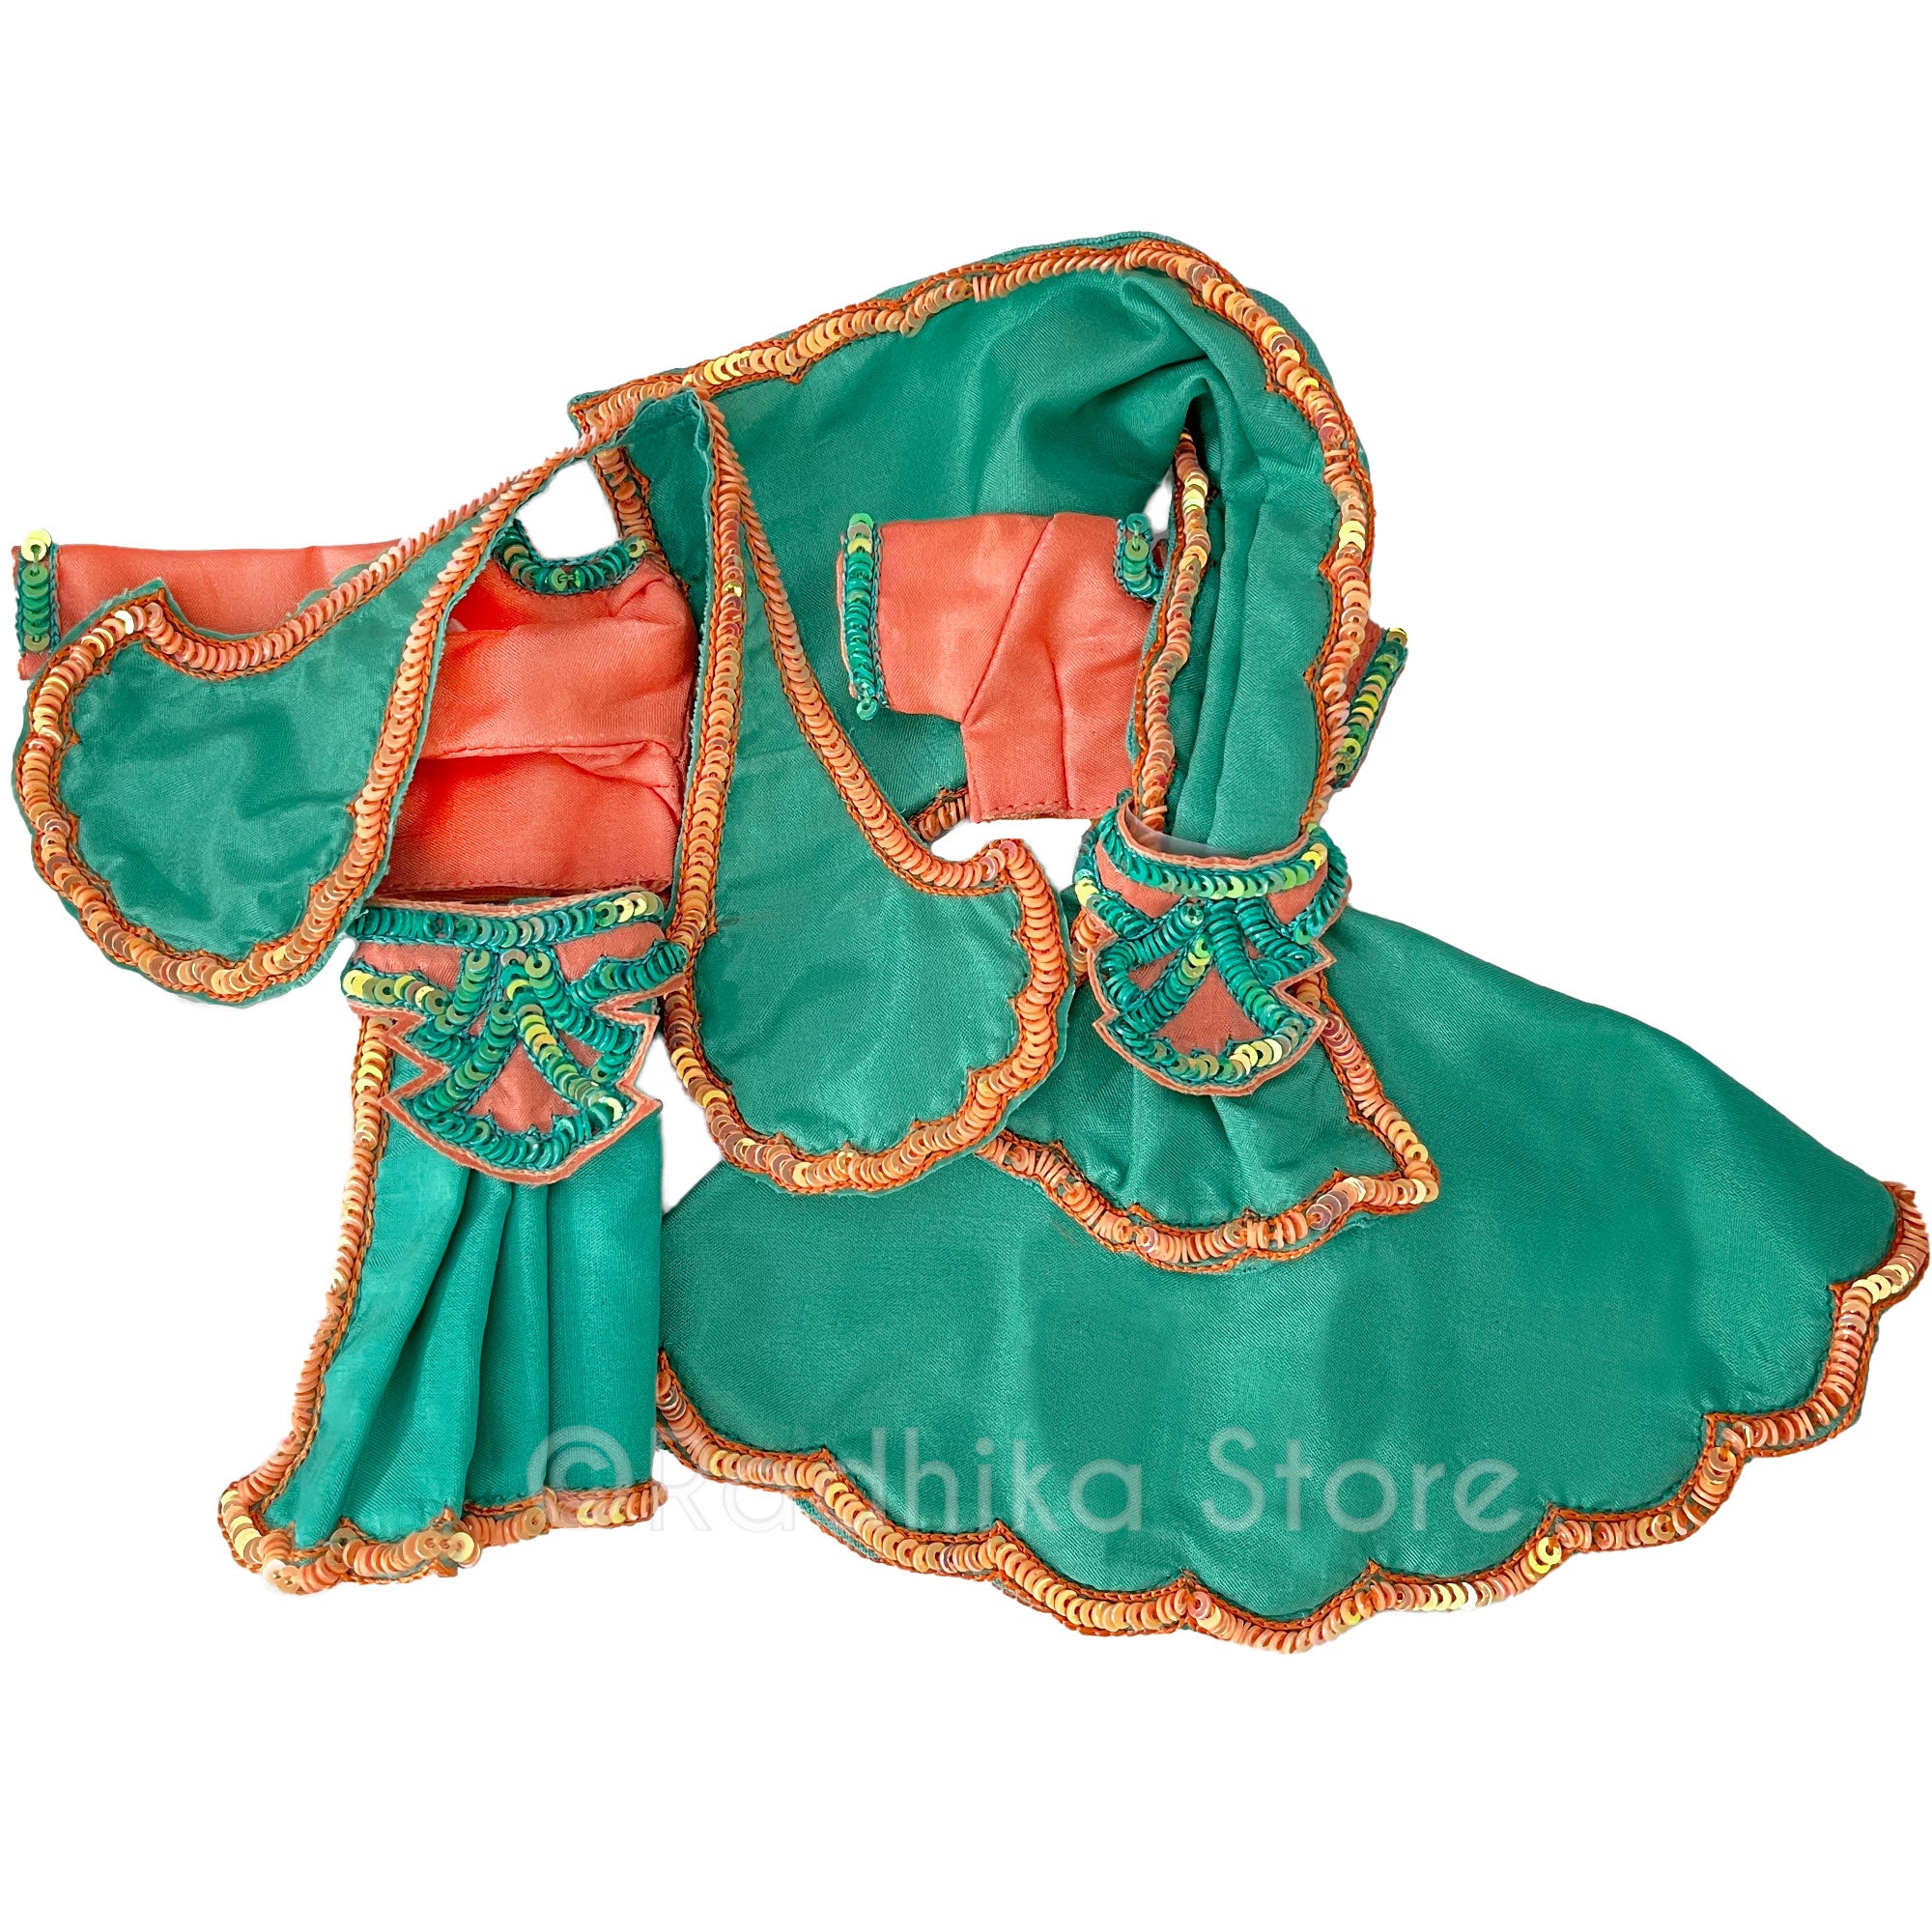 Kusam Sarovara - Peach and Teal Green - Radha Krishna Deity Outfit- With Belt